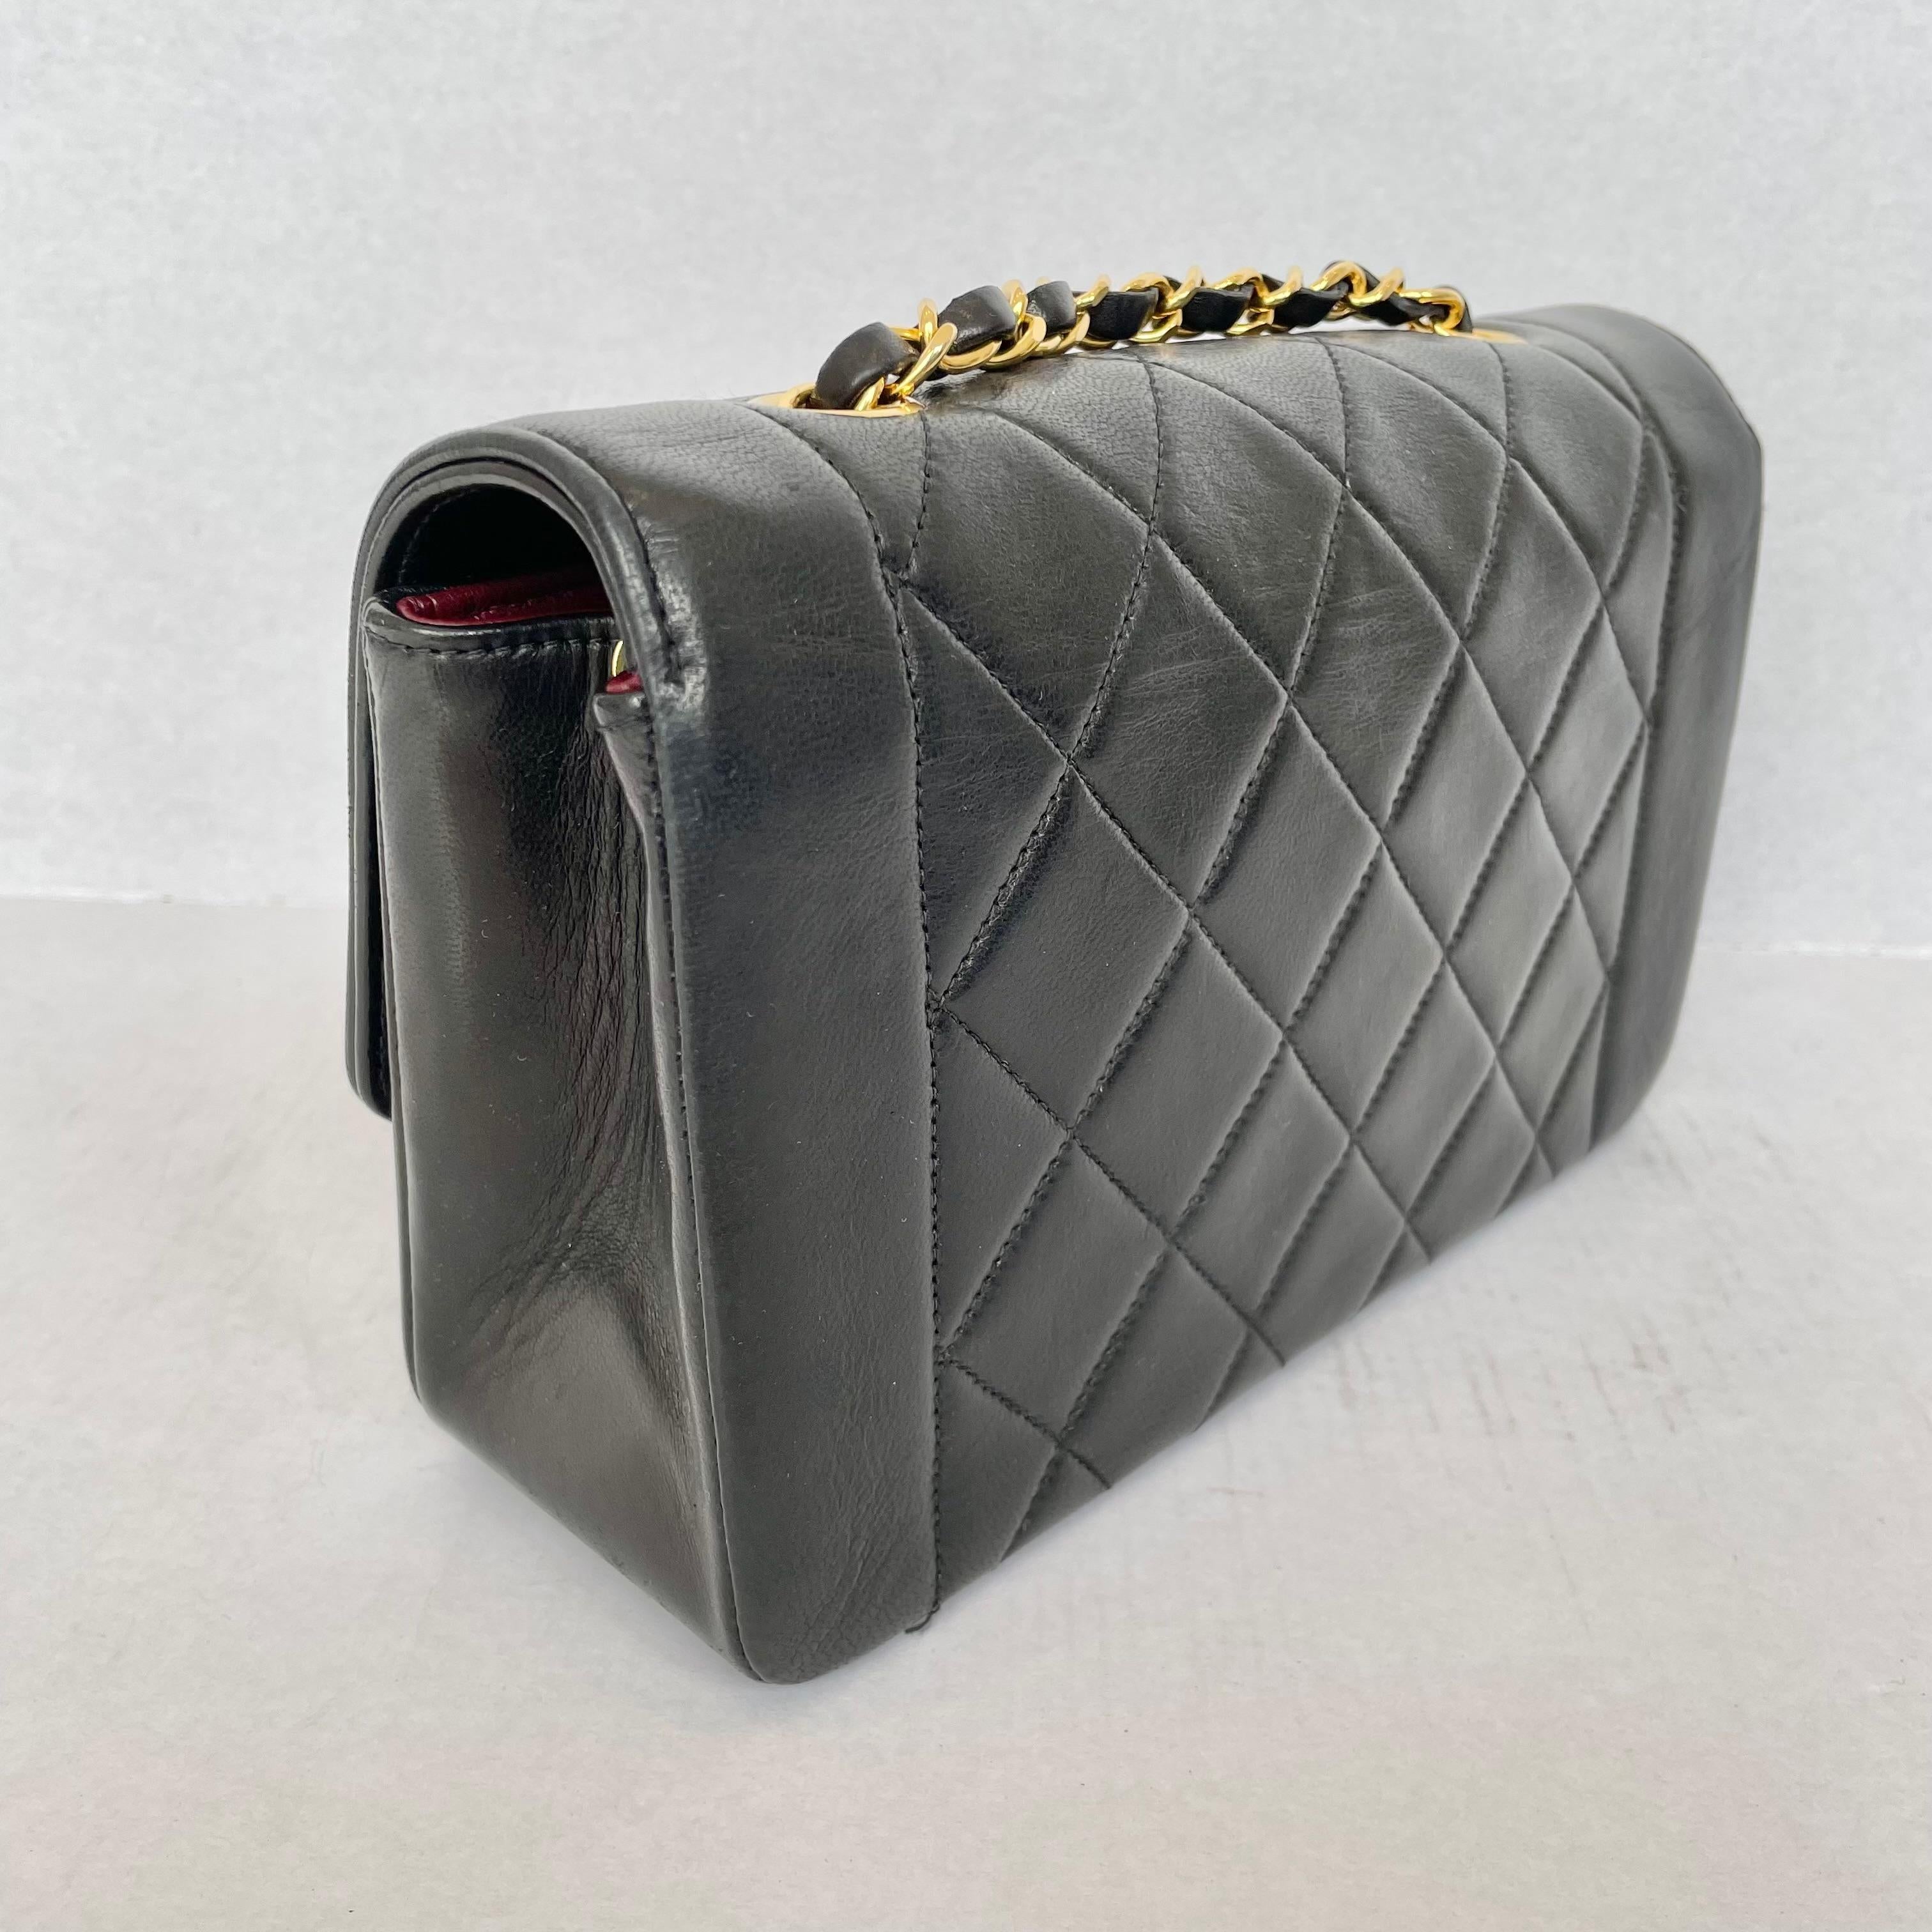 Rare Chanel Diana Shoulder Bag Black Quilted Lambskin Leather, 1990s France For Sale 2